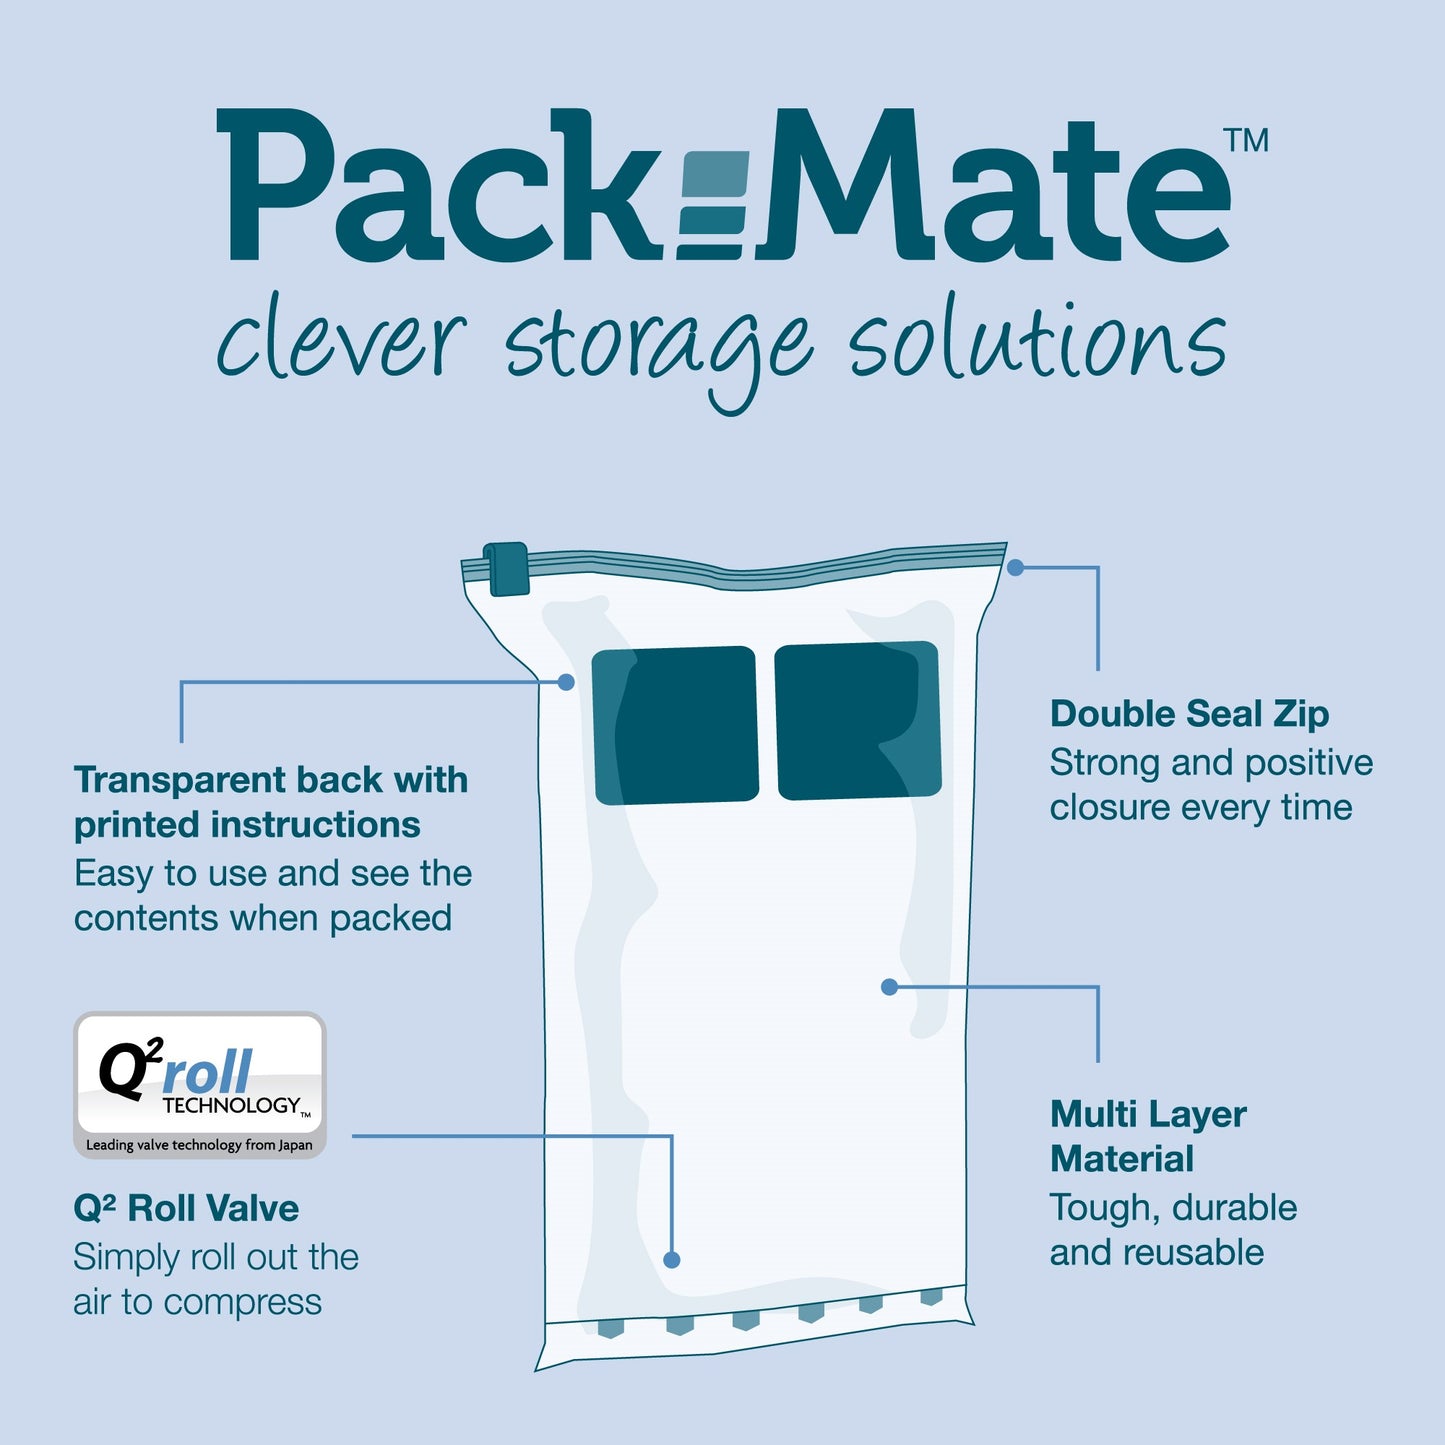 Packmate LARGE Travel Roll Storage Bag Set (50x70cm)